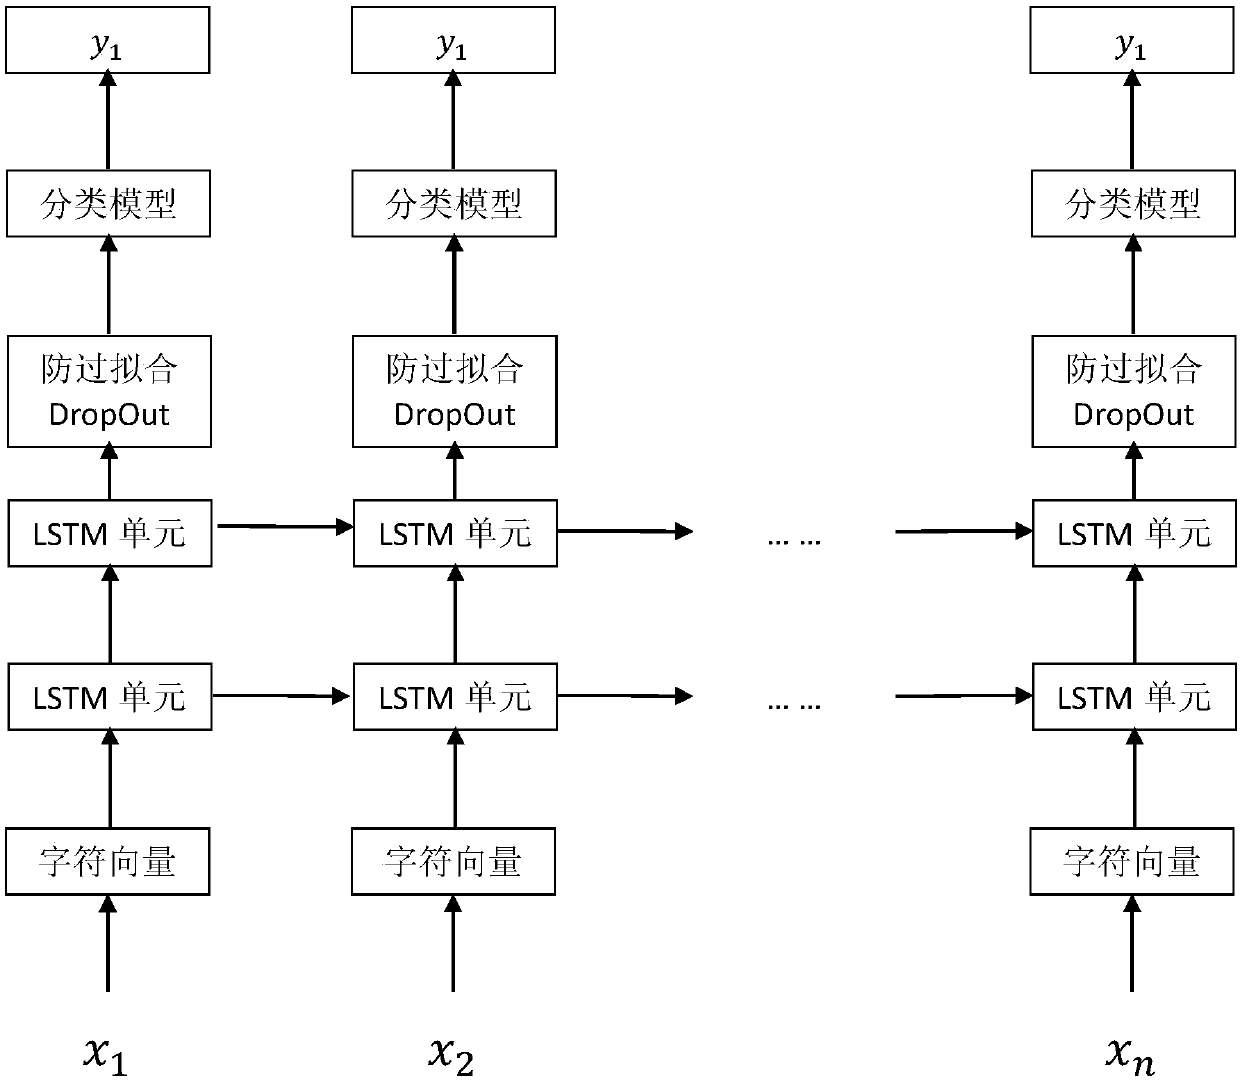 LSTM-based word segmentation method